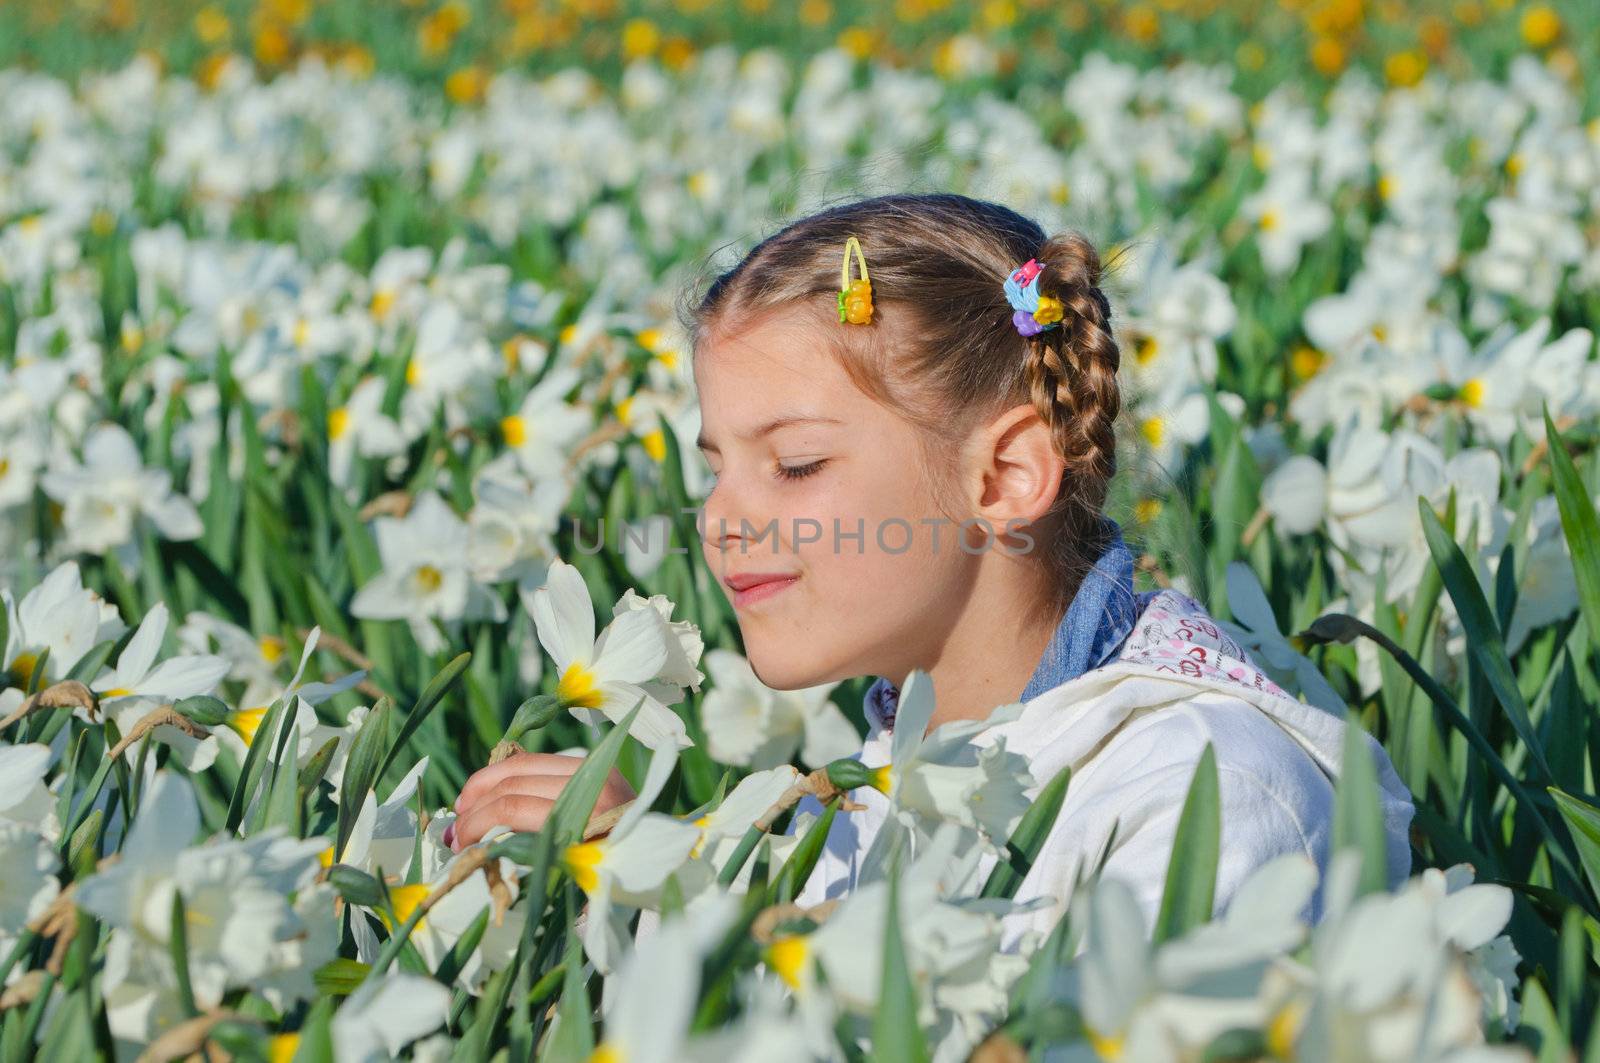 Girl And Daffodils by maxoliki